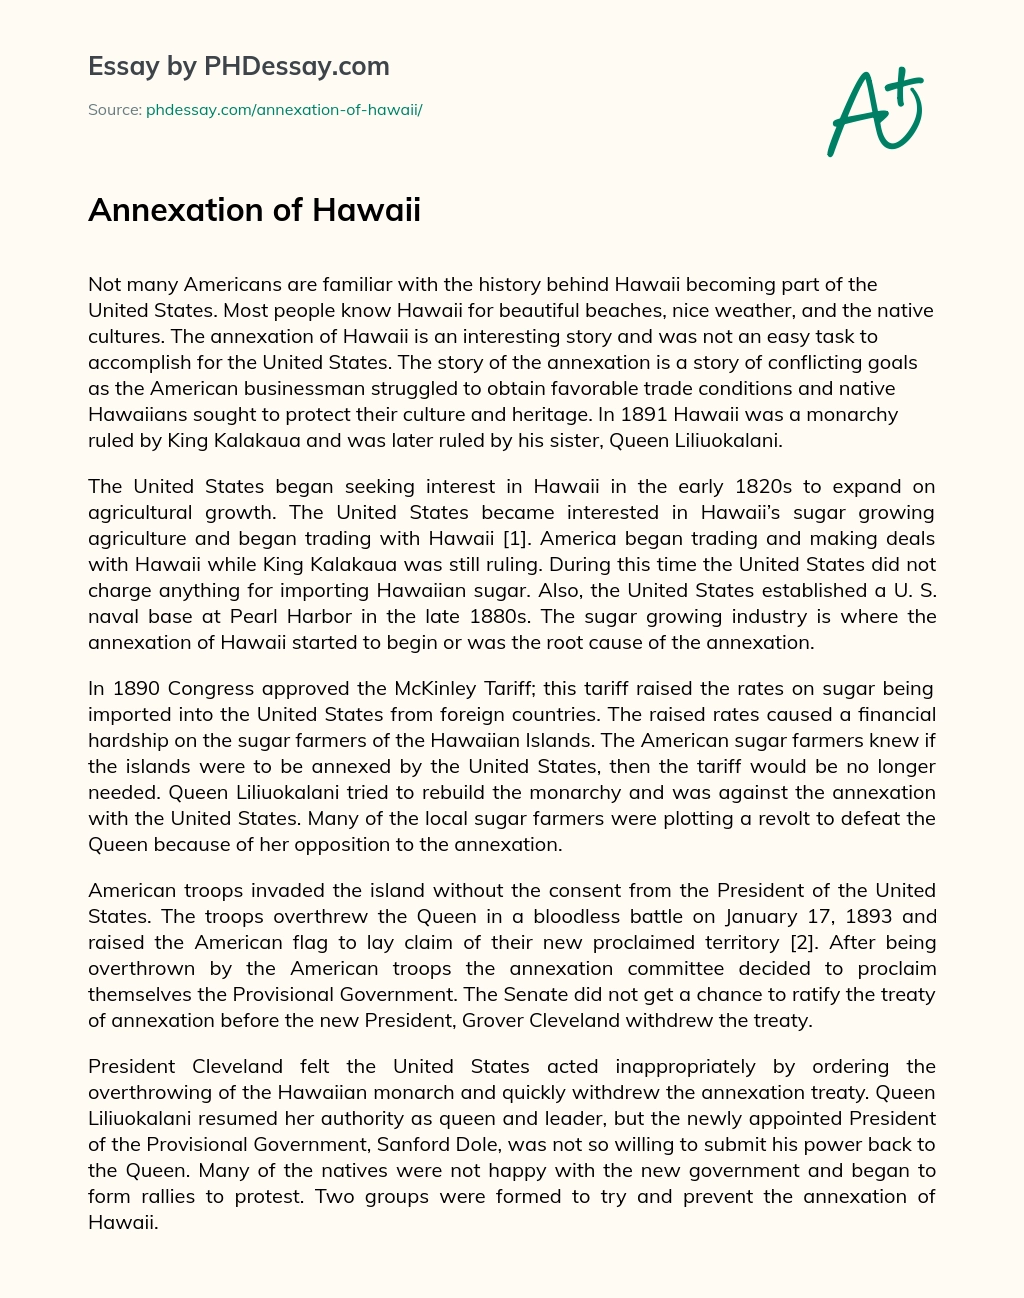 Annexation of Hawaii essay